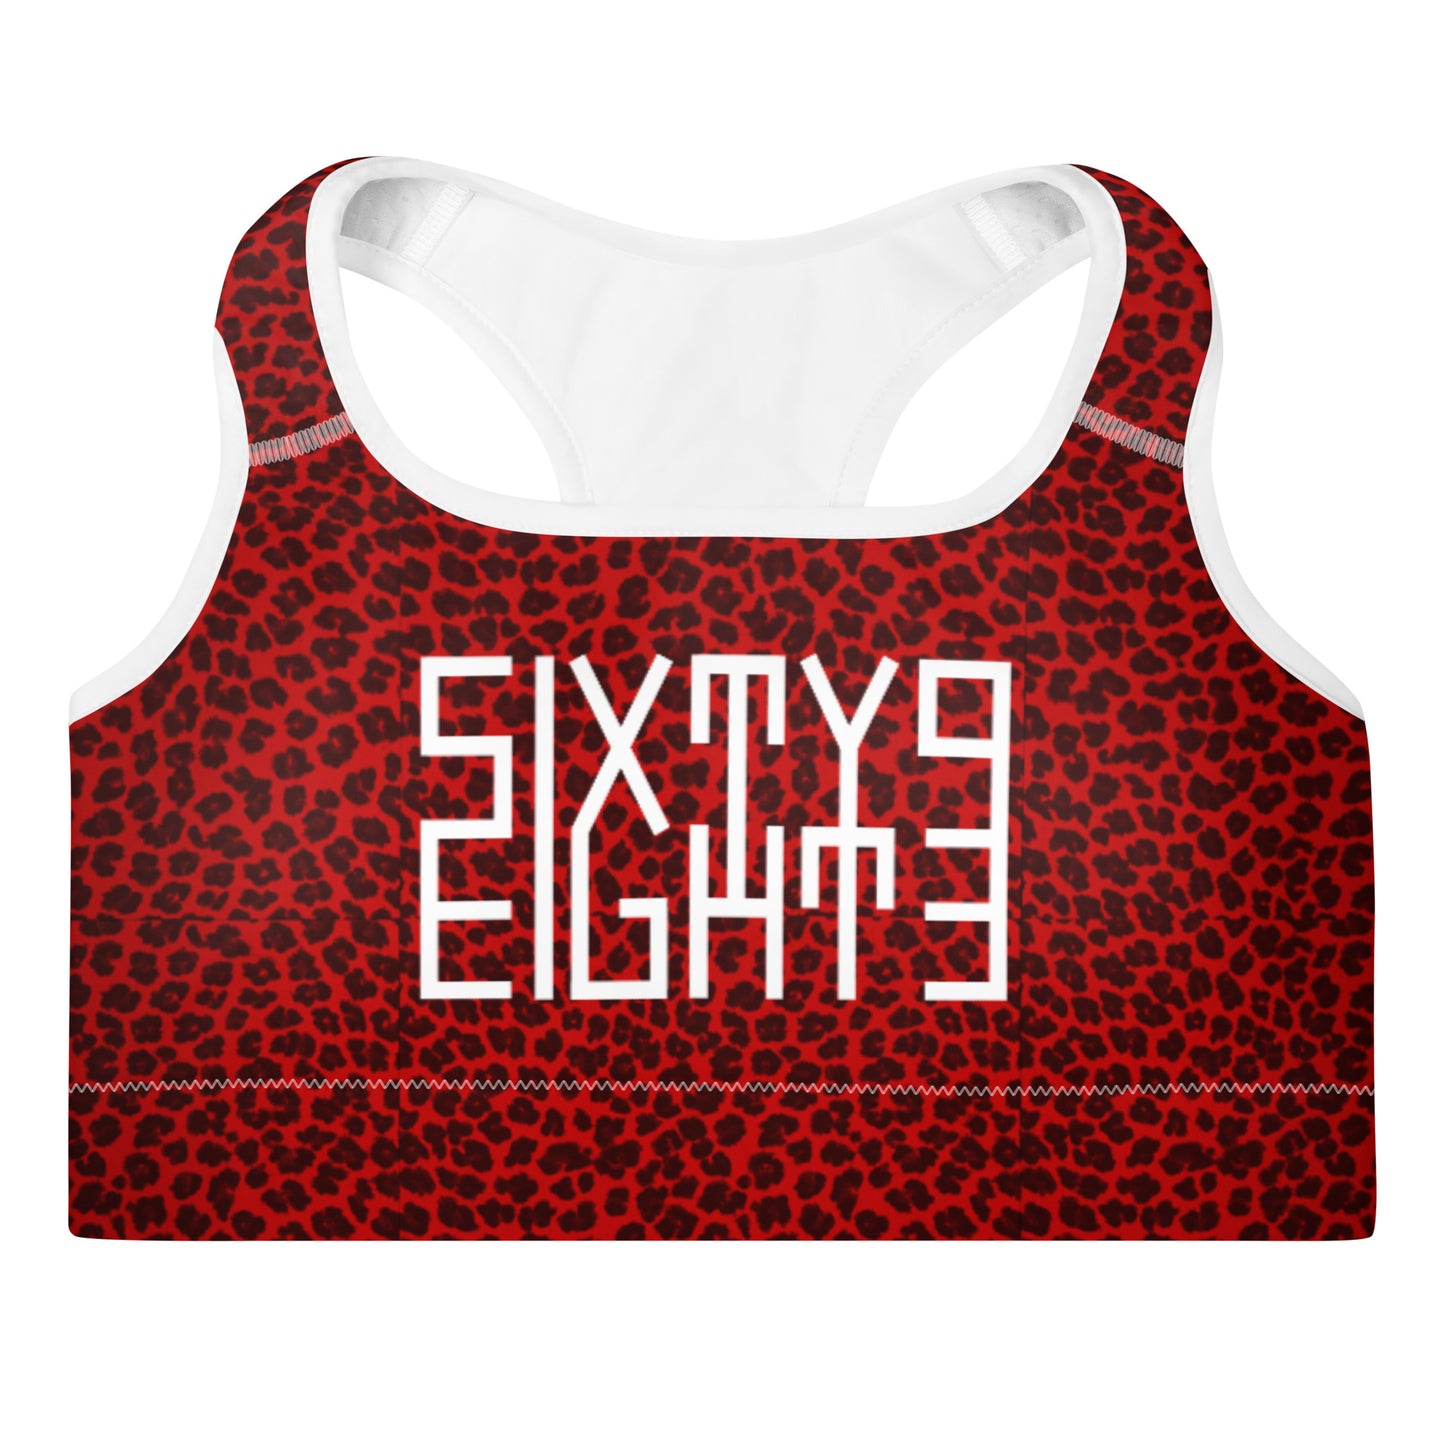 Sixty Eight 93 Logo White Cheetah Red Padded Sports Bra